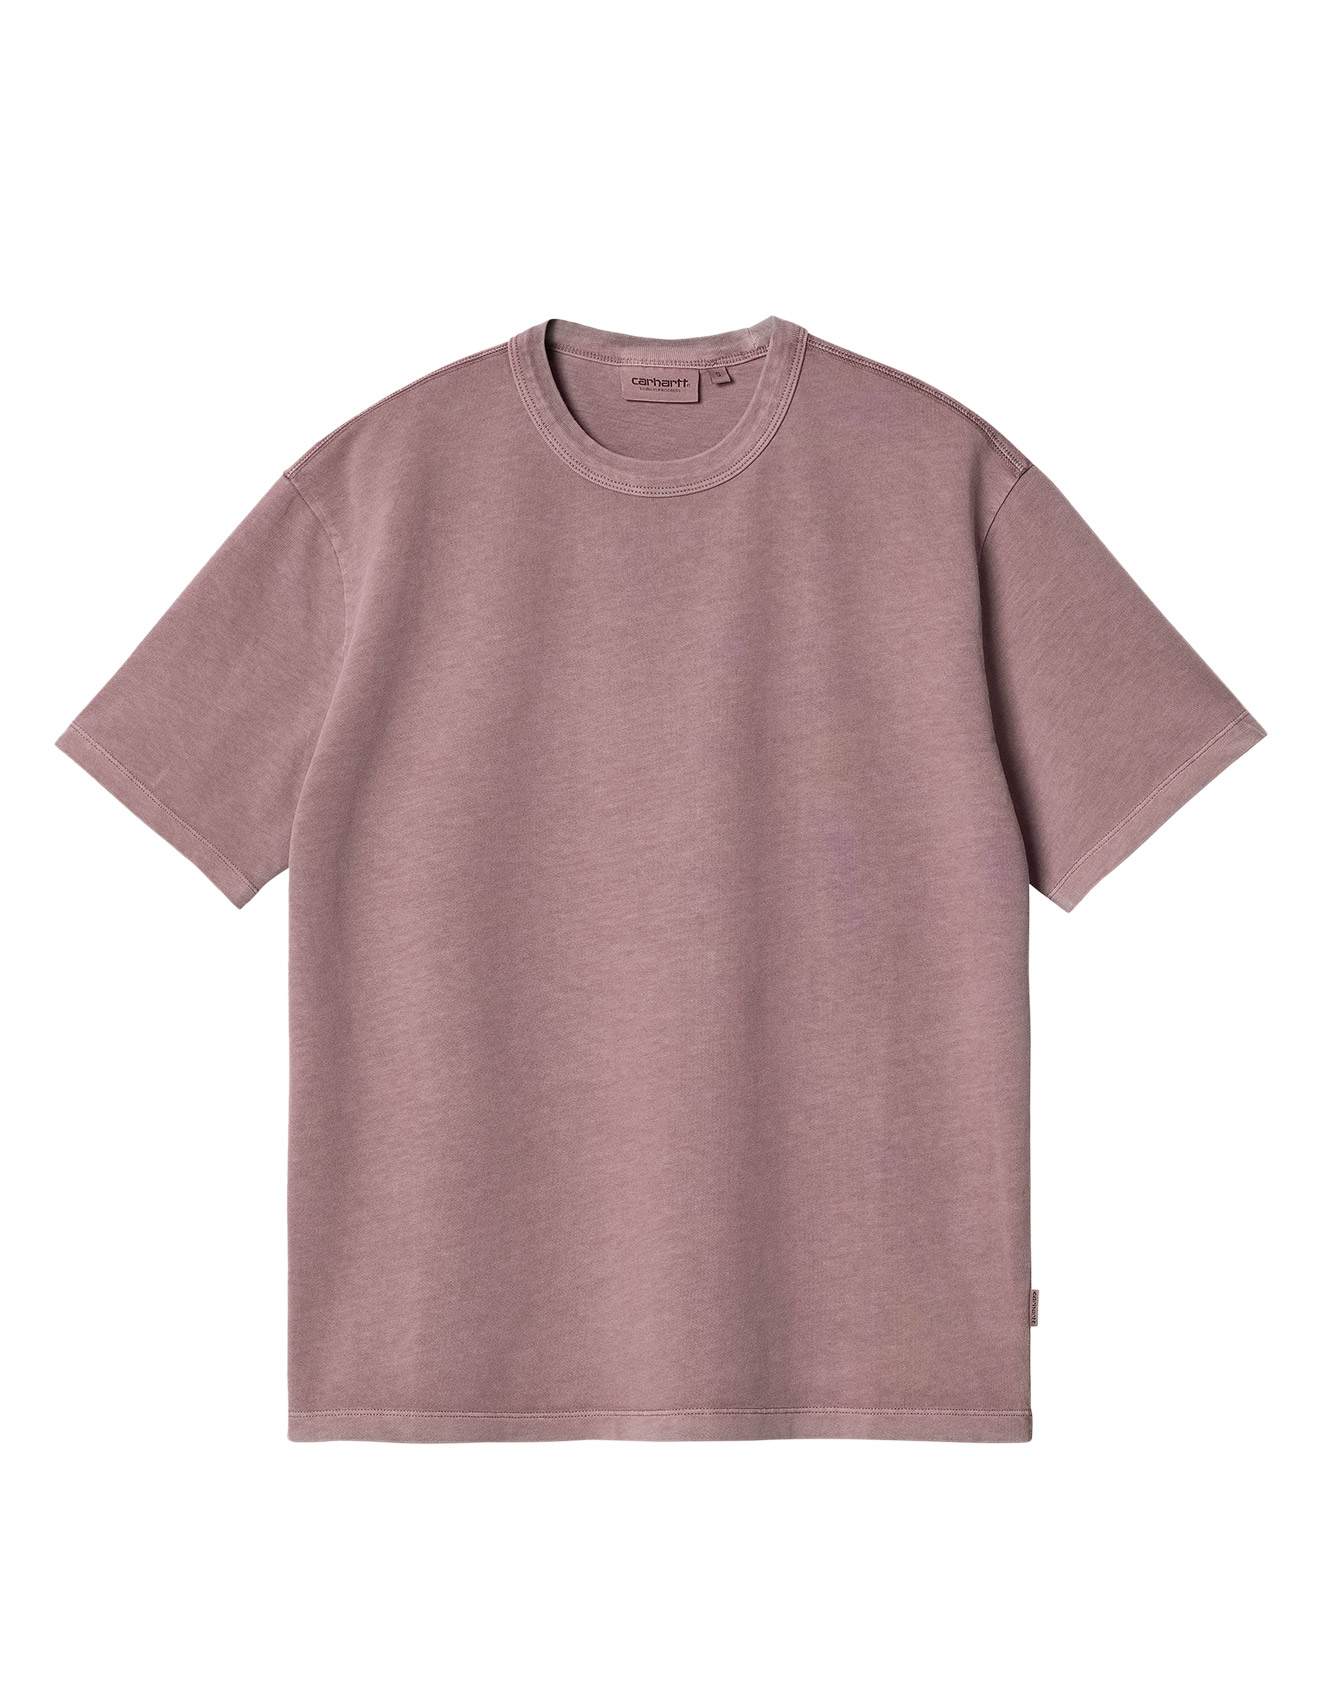 Carhartt WIP – S/S Taos T-Shirt